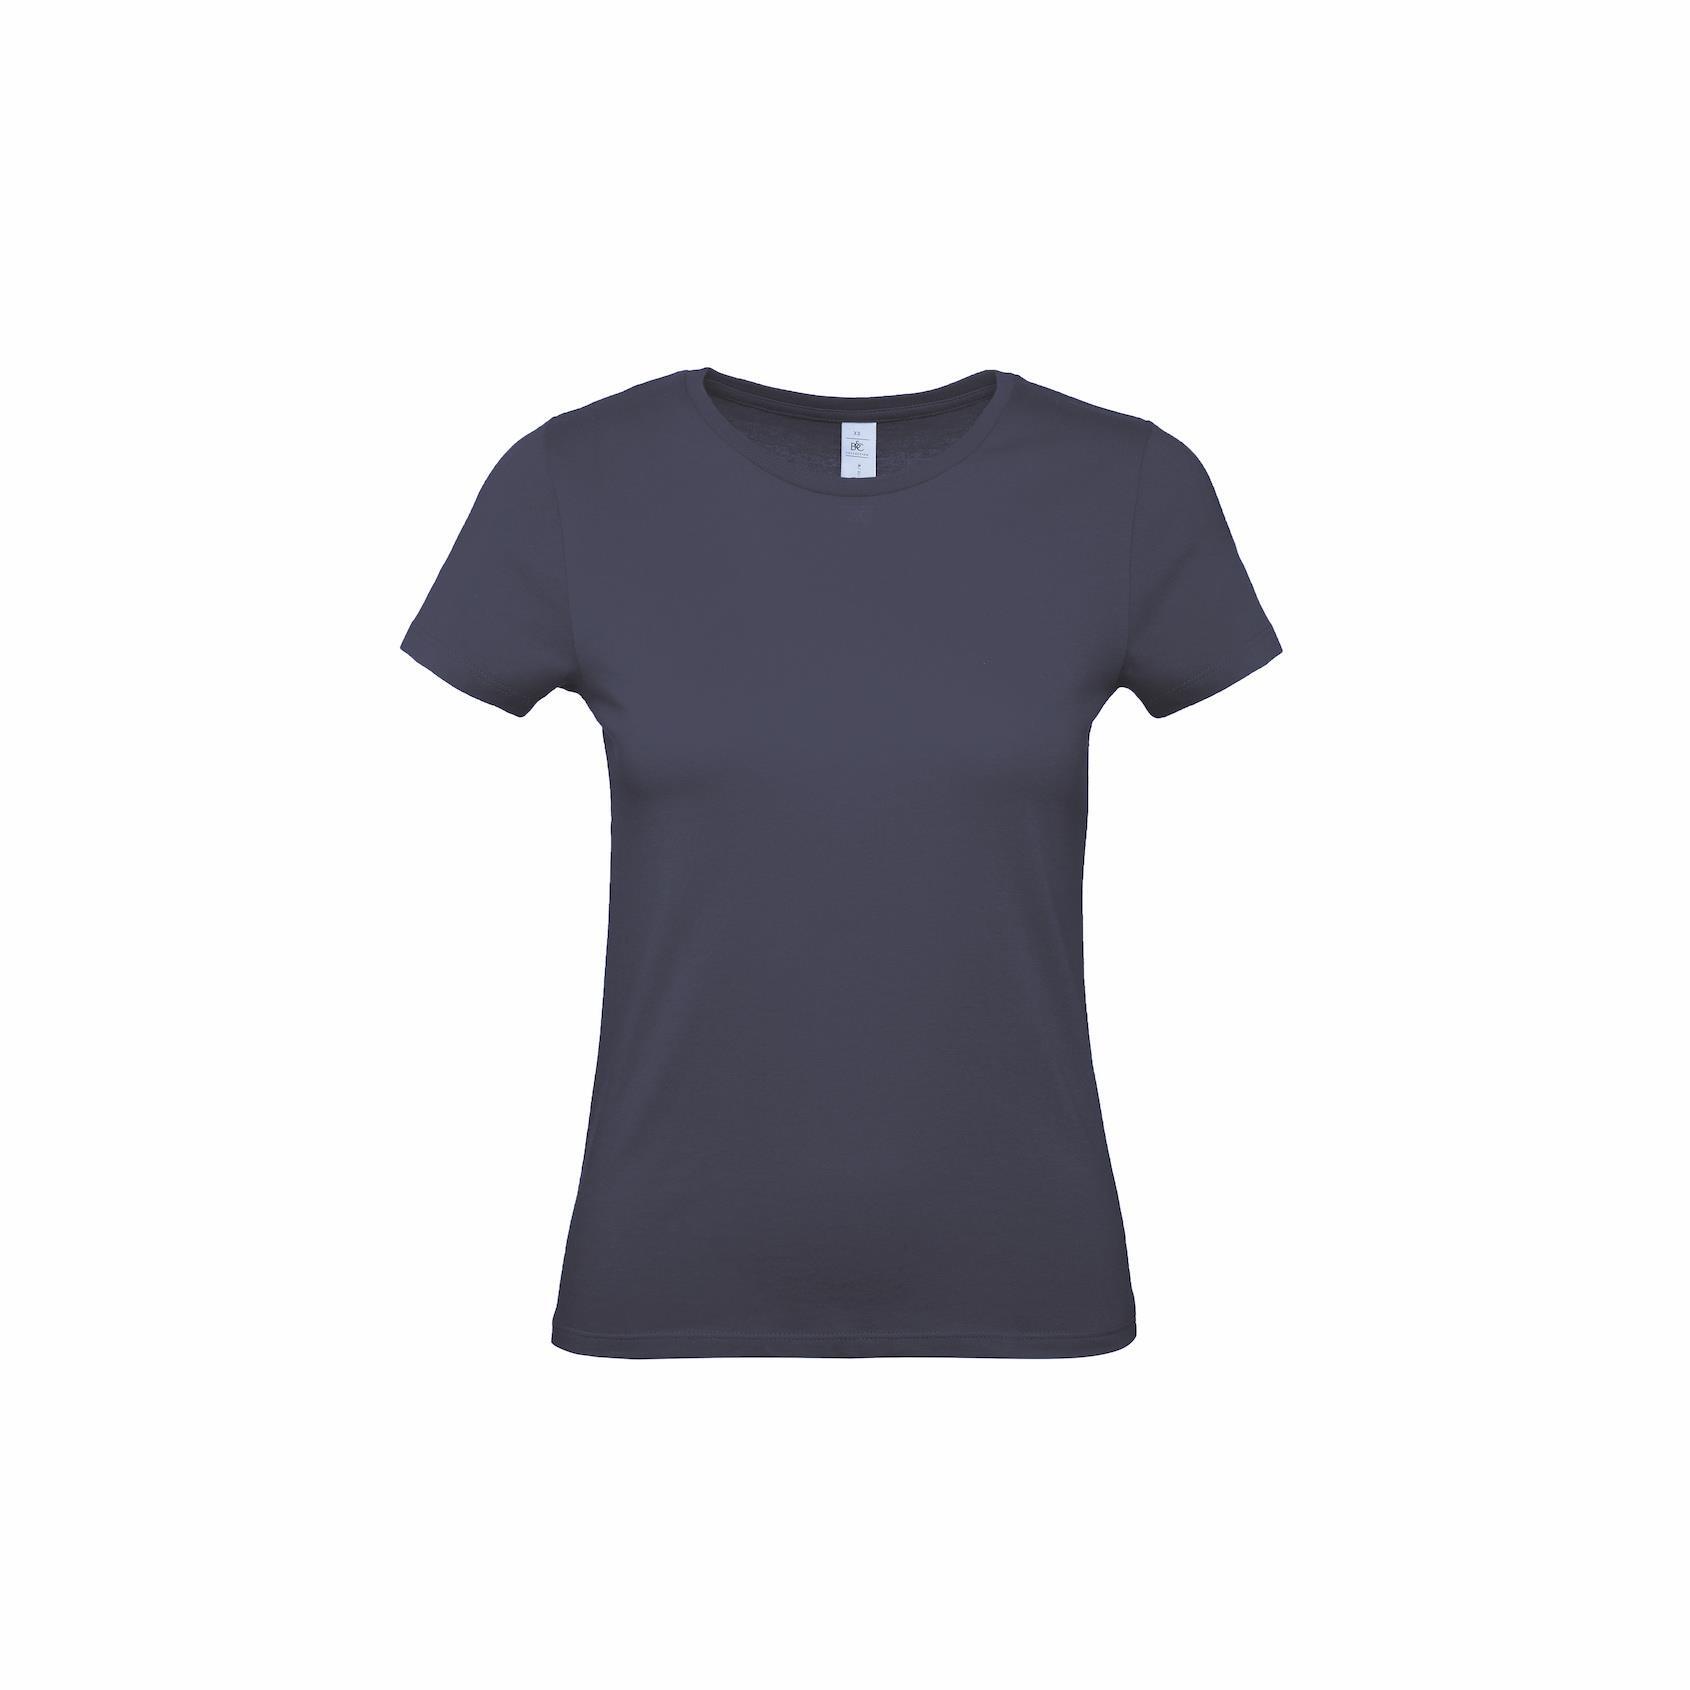 Modern T-shirt voor haar dames shirt donkerblauw